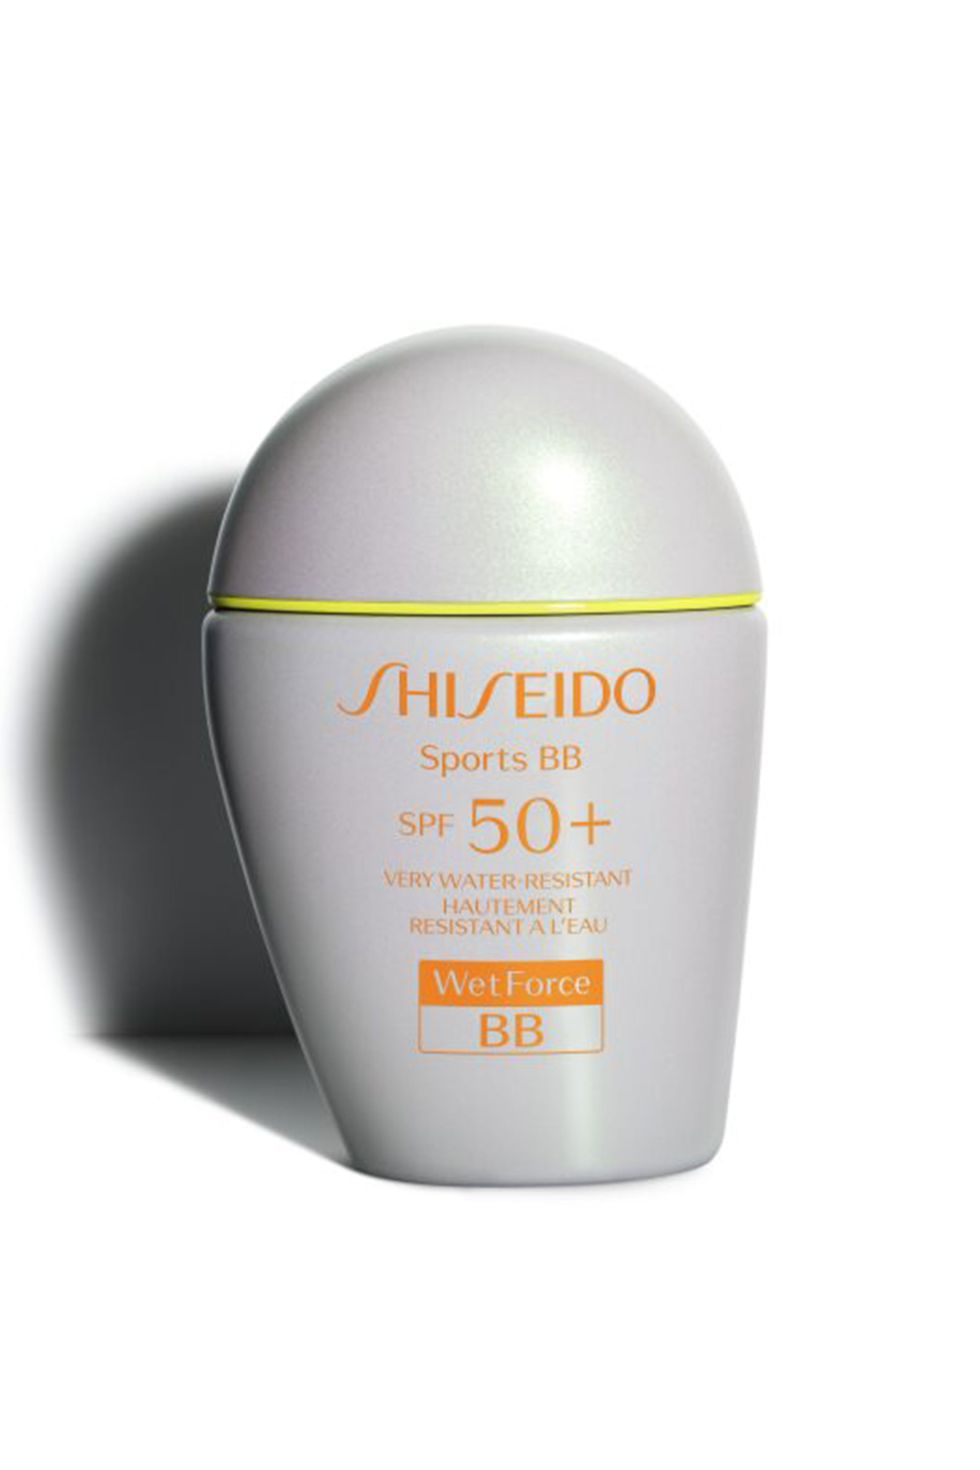 Shiseido Sports BB